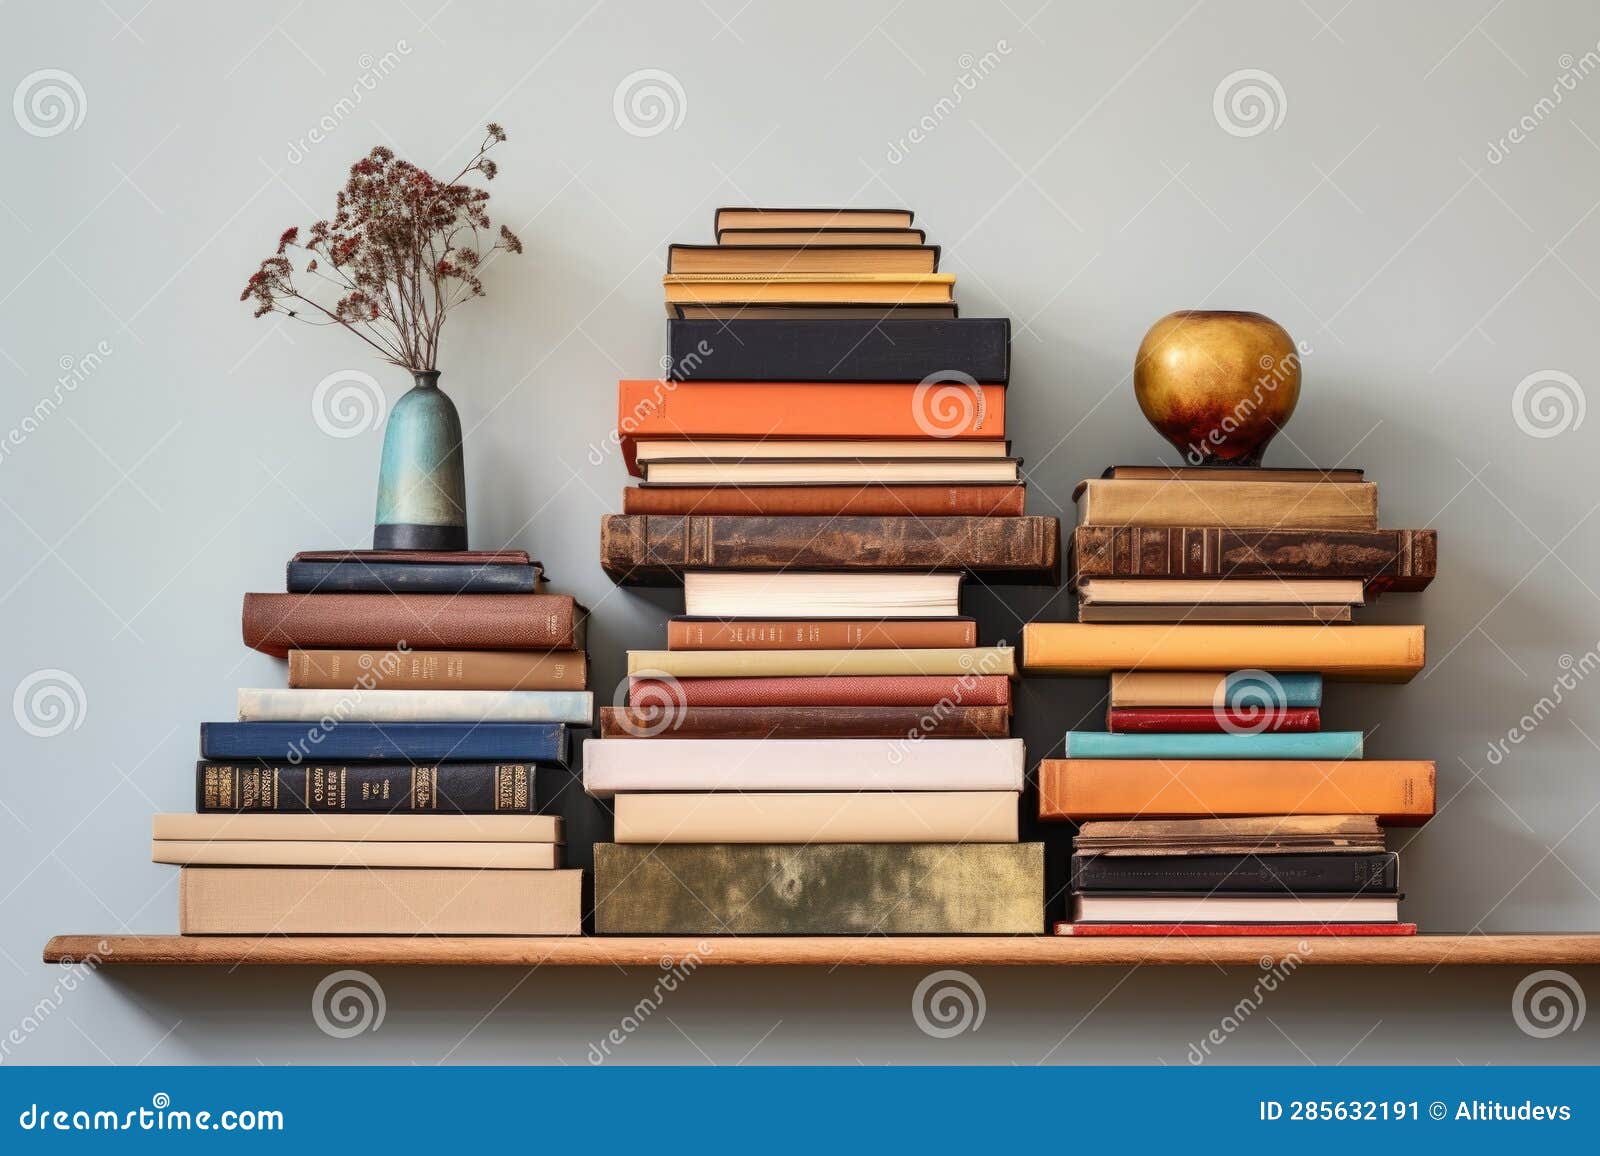 Neatly Stacked Books on a Floating Shelf Stock Image - Image of ...